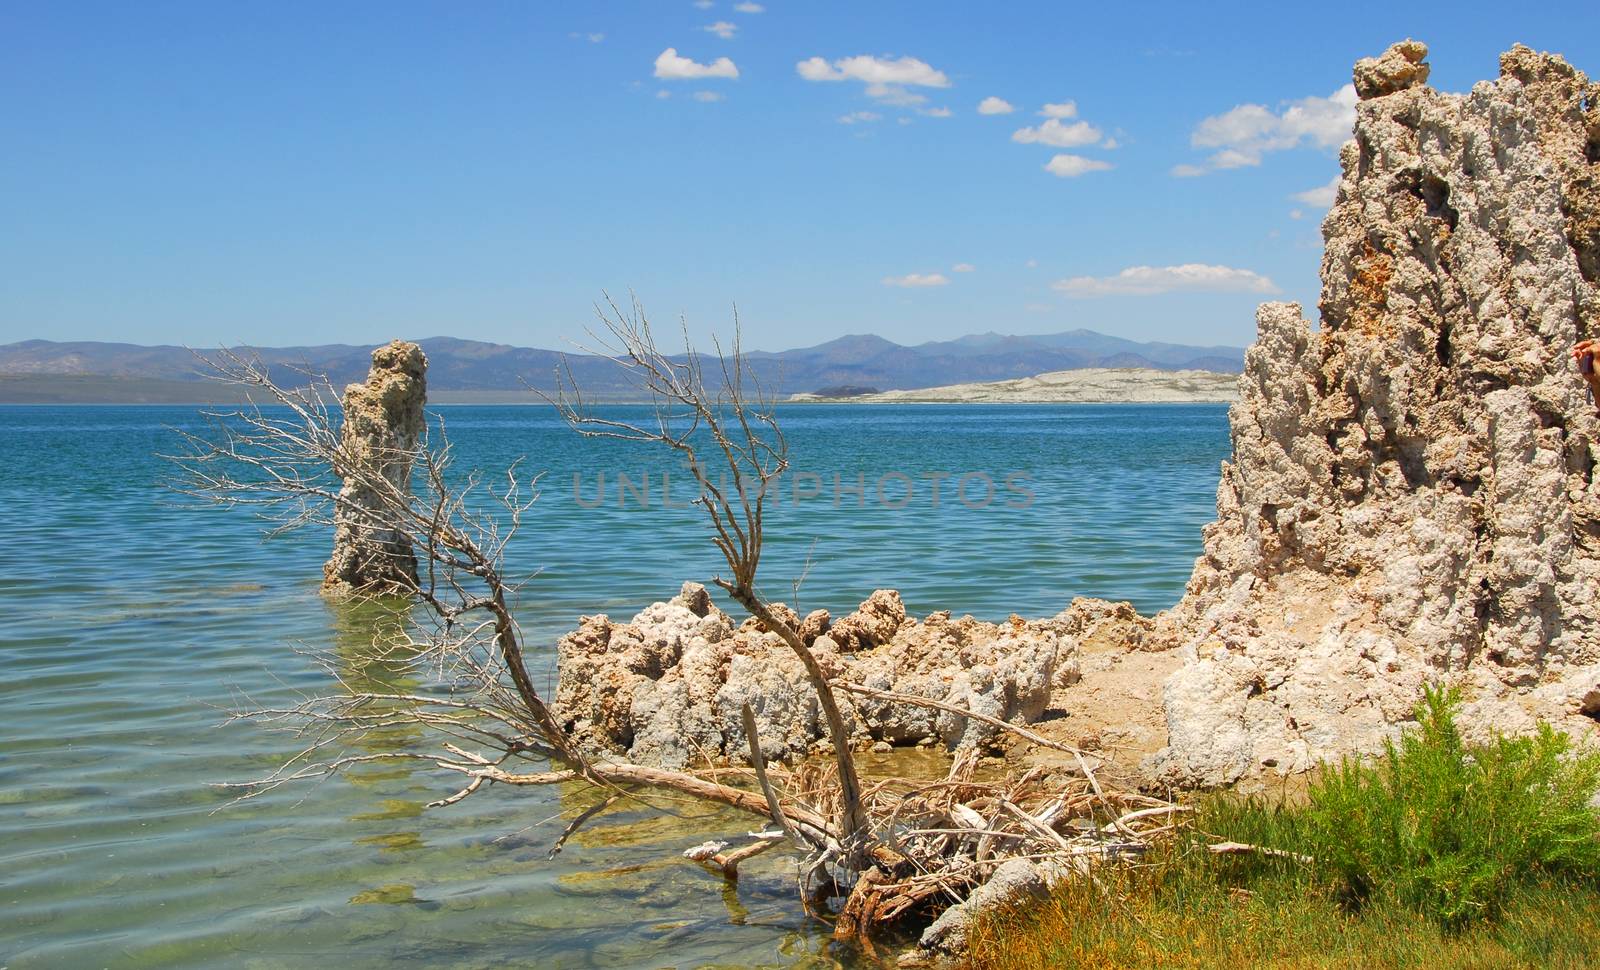 Tufas rocks made of calcium carbonate deposits at Mono Lake California,USA